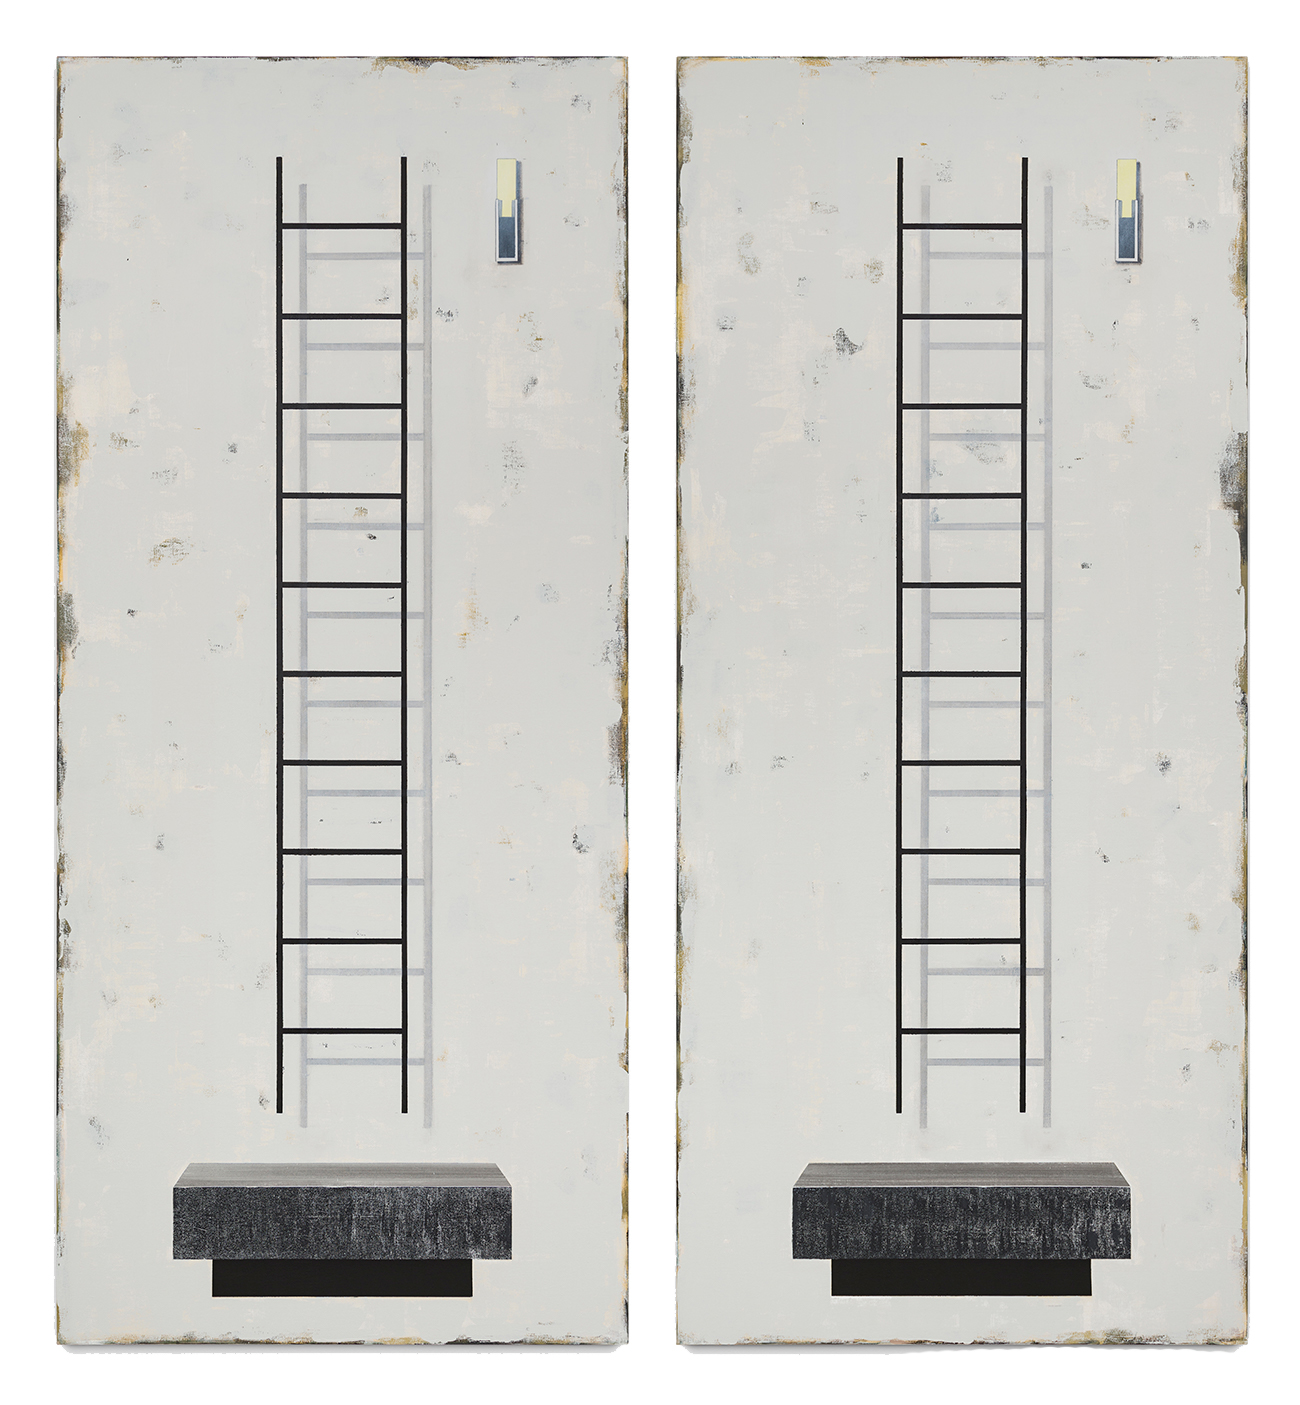 Squint 52 (ladders)